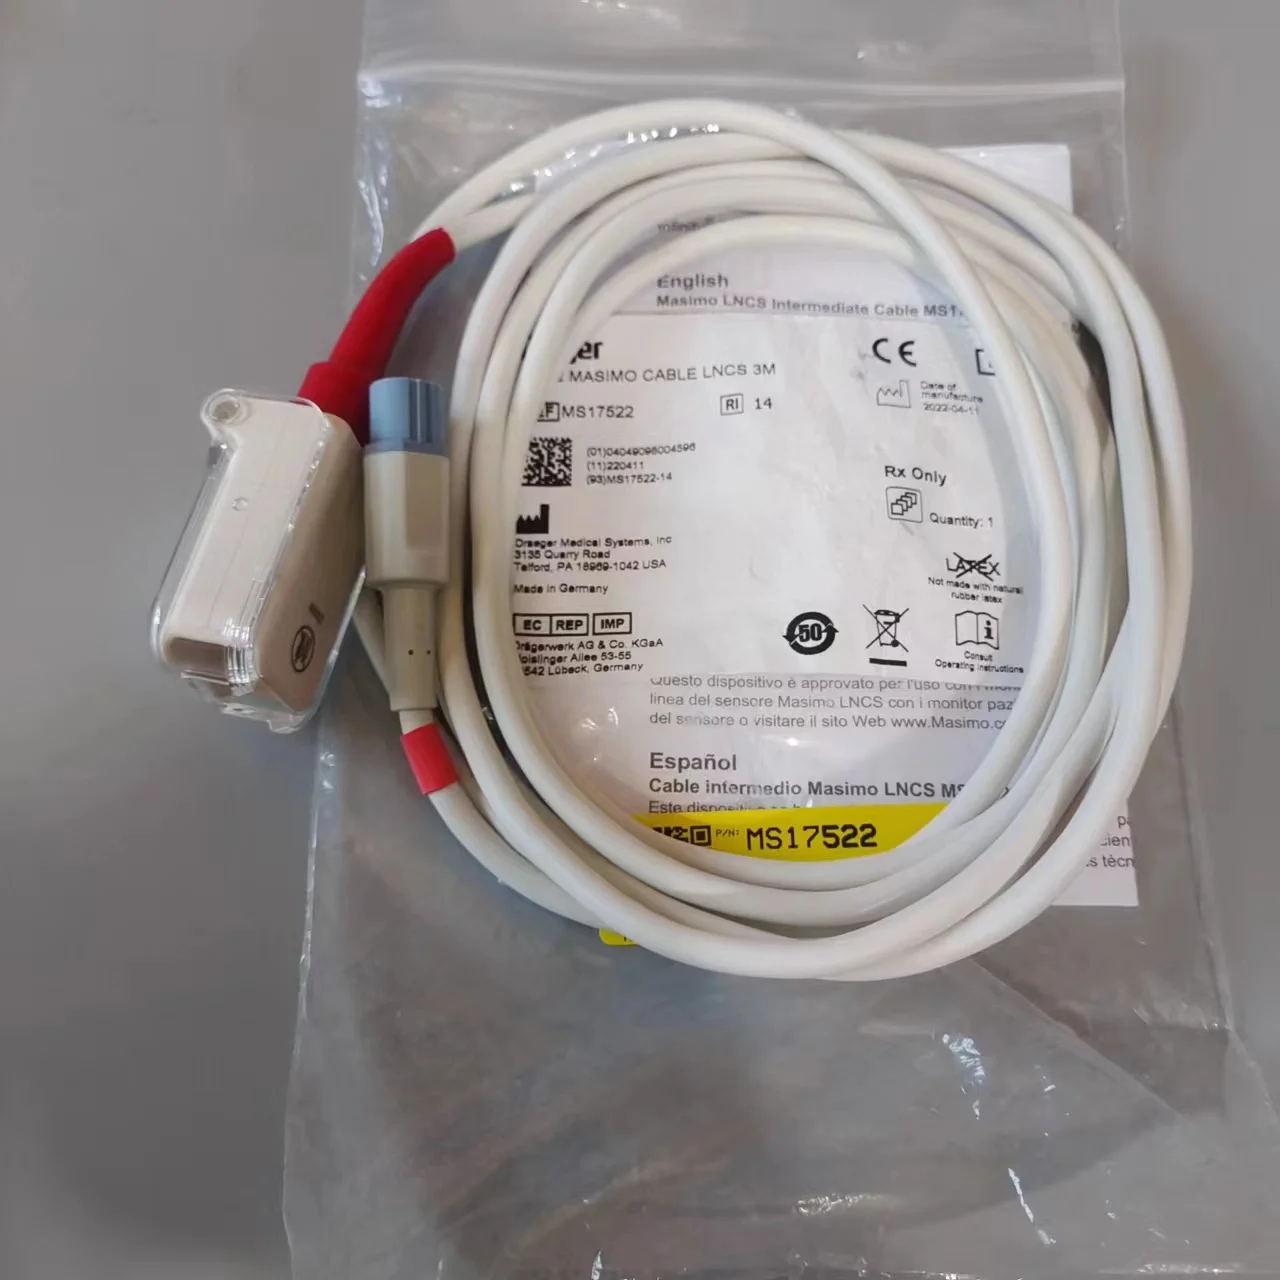 MS17522: Drager SPO2 Masimo Cable LNCS 3M new original